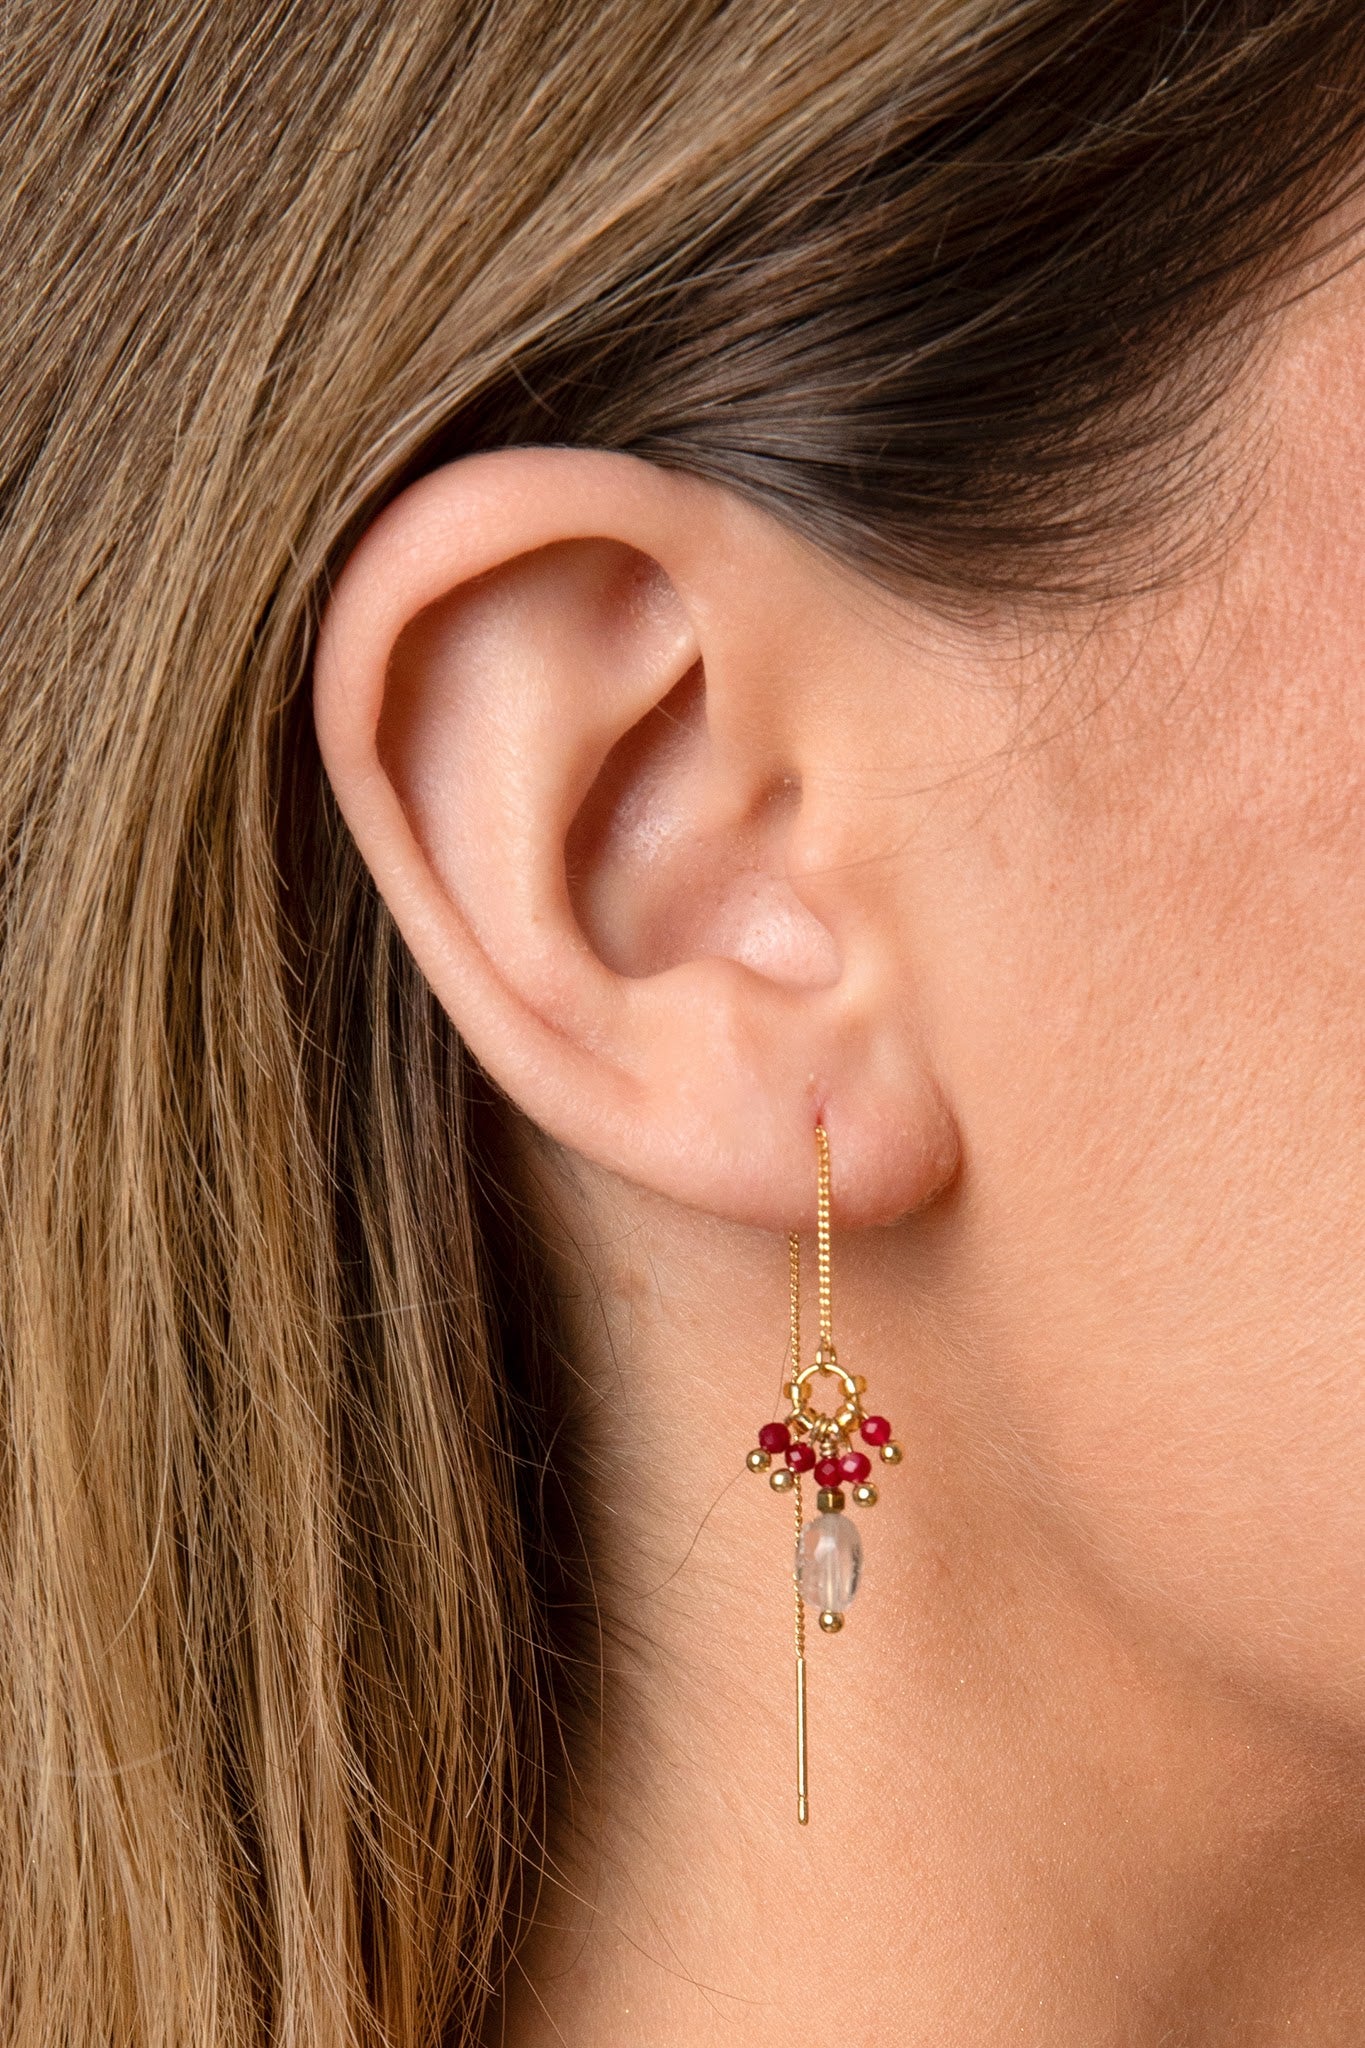 SG17 - Waterfall earrings - Garnet